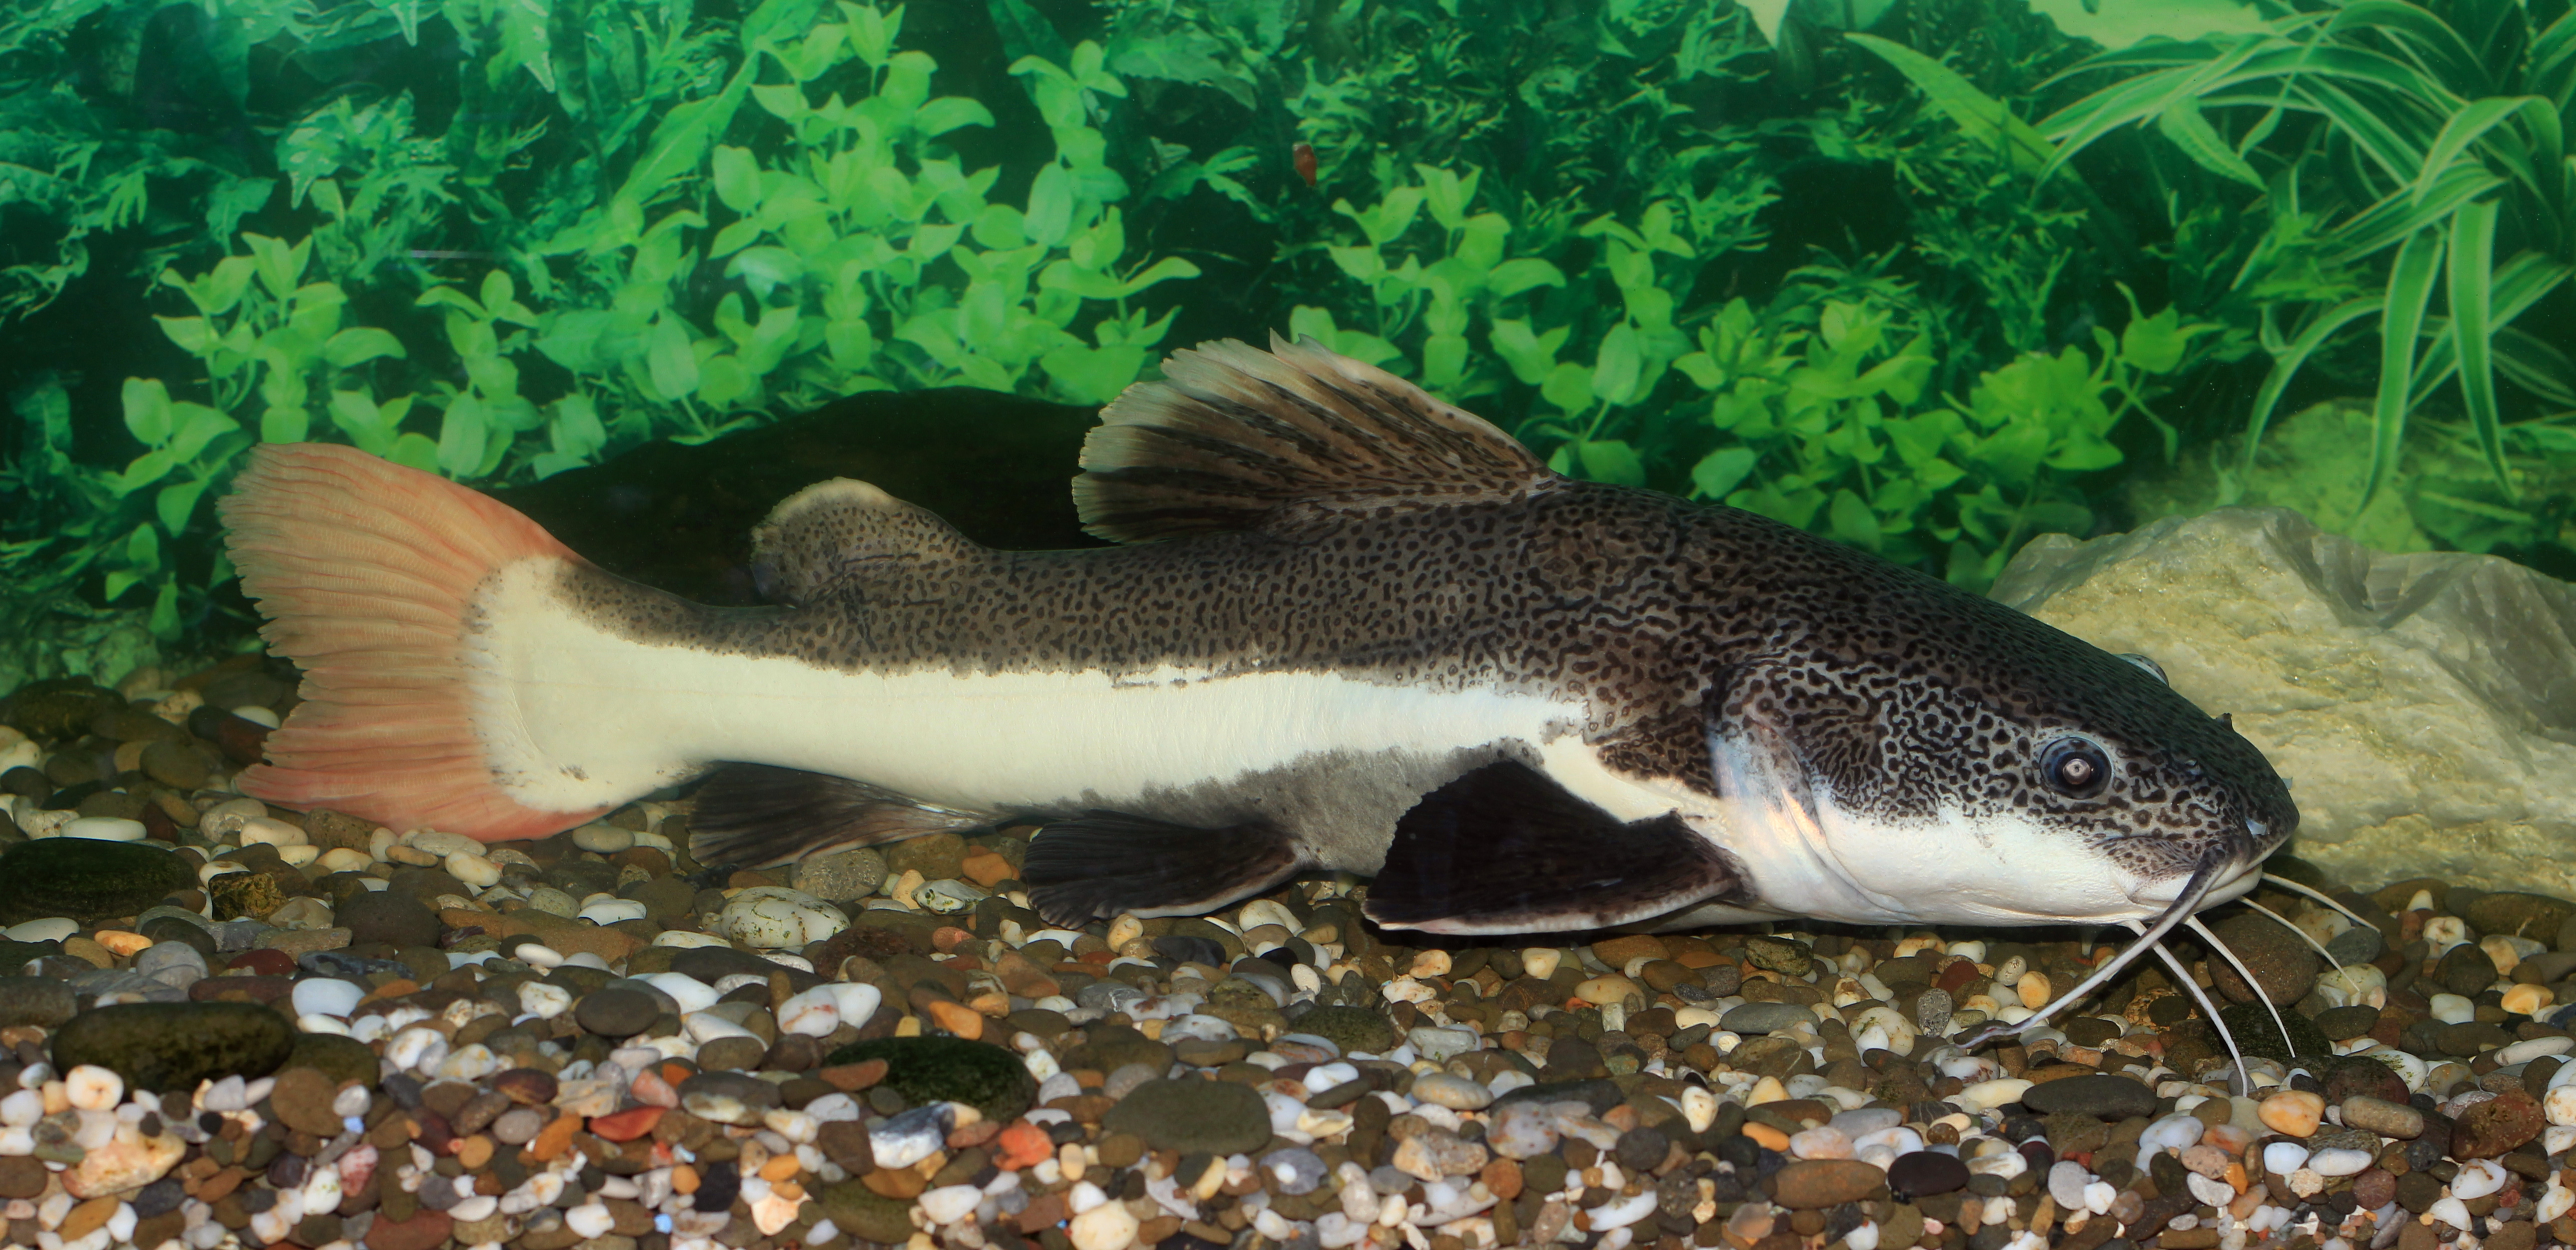 Redtail catfish - Wikipedia